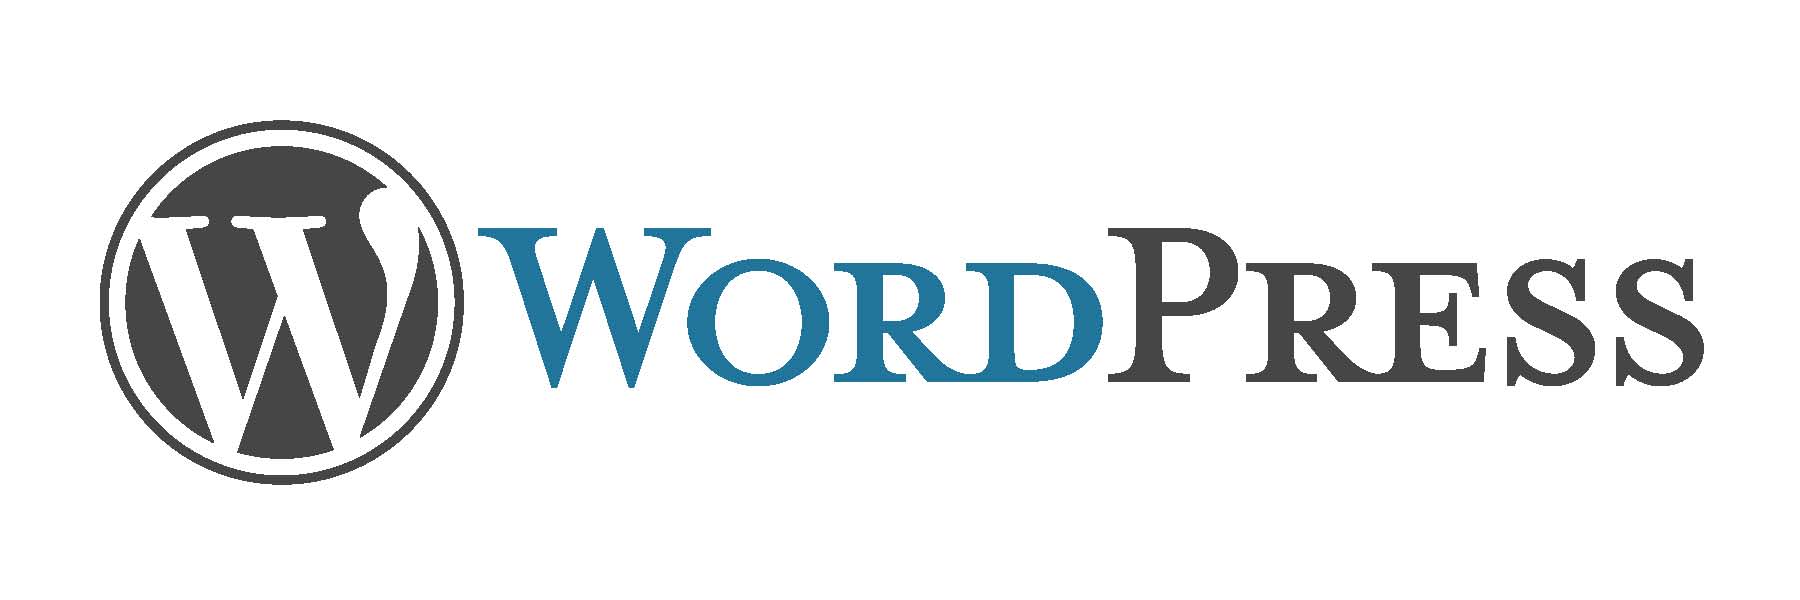 wordpress logo openinnova